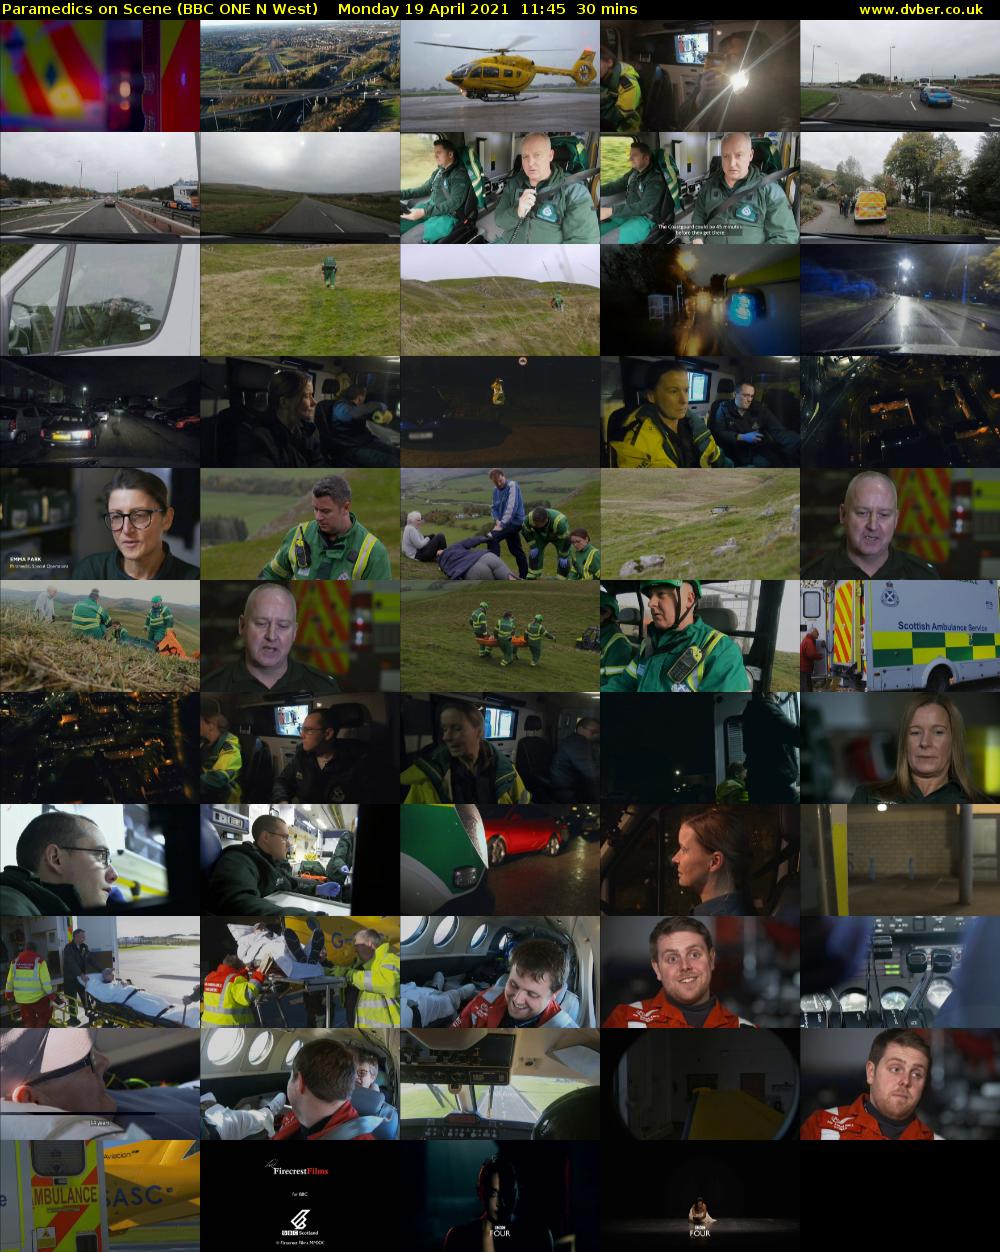 Paramedics on Scene (BBC ONE N West) Monday 19 April 2021 11:45 - 12:15